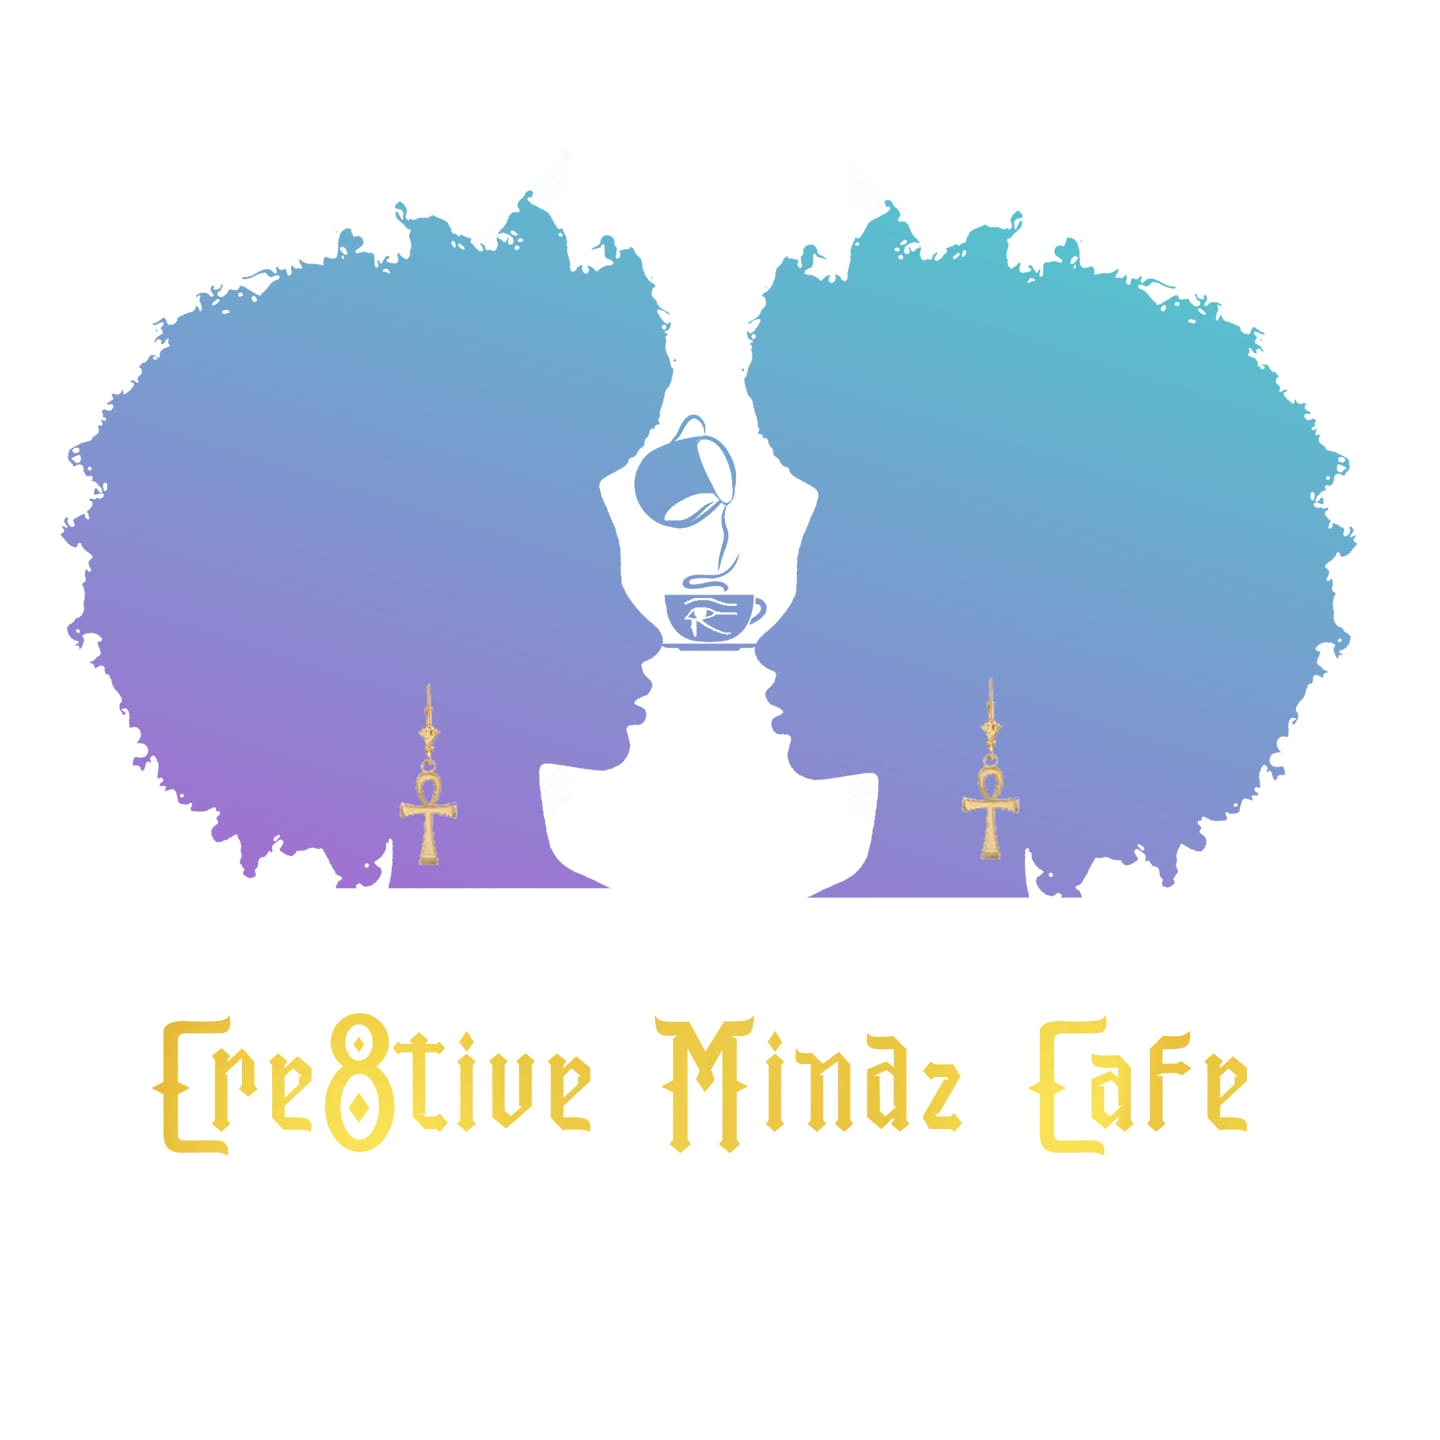 Cre8tive Mindz Cafe Logo